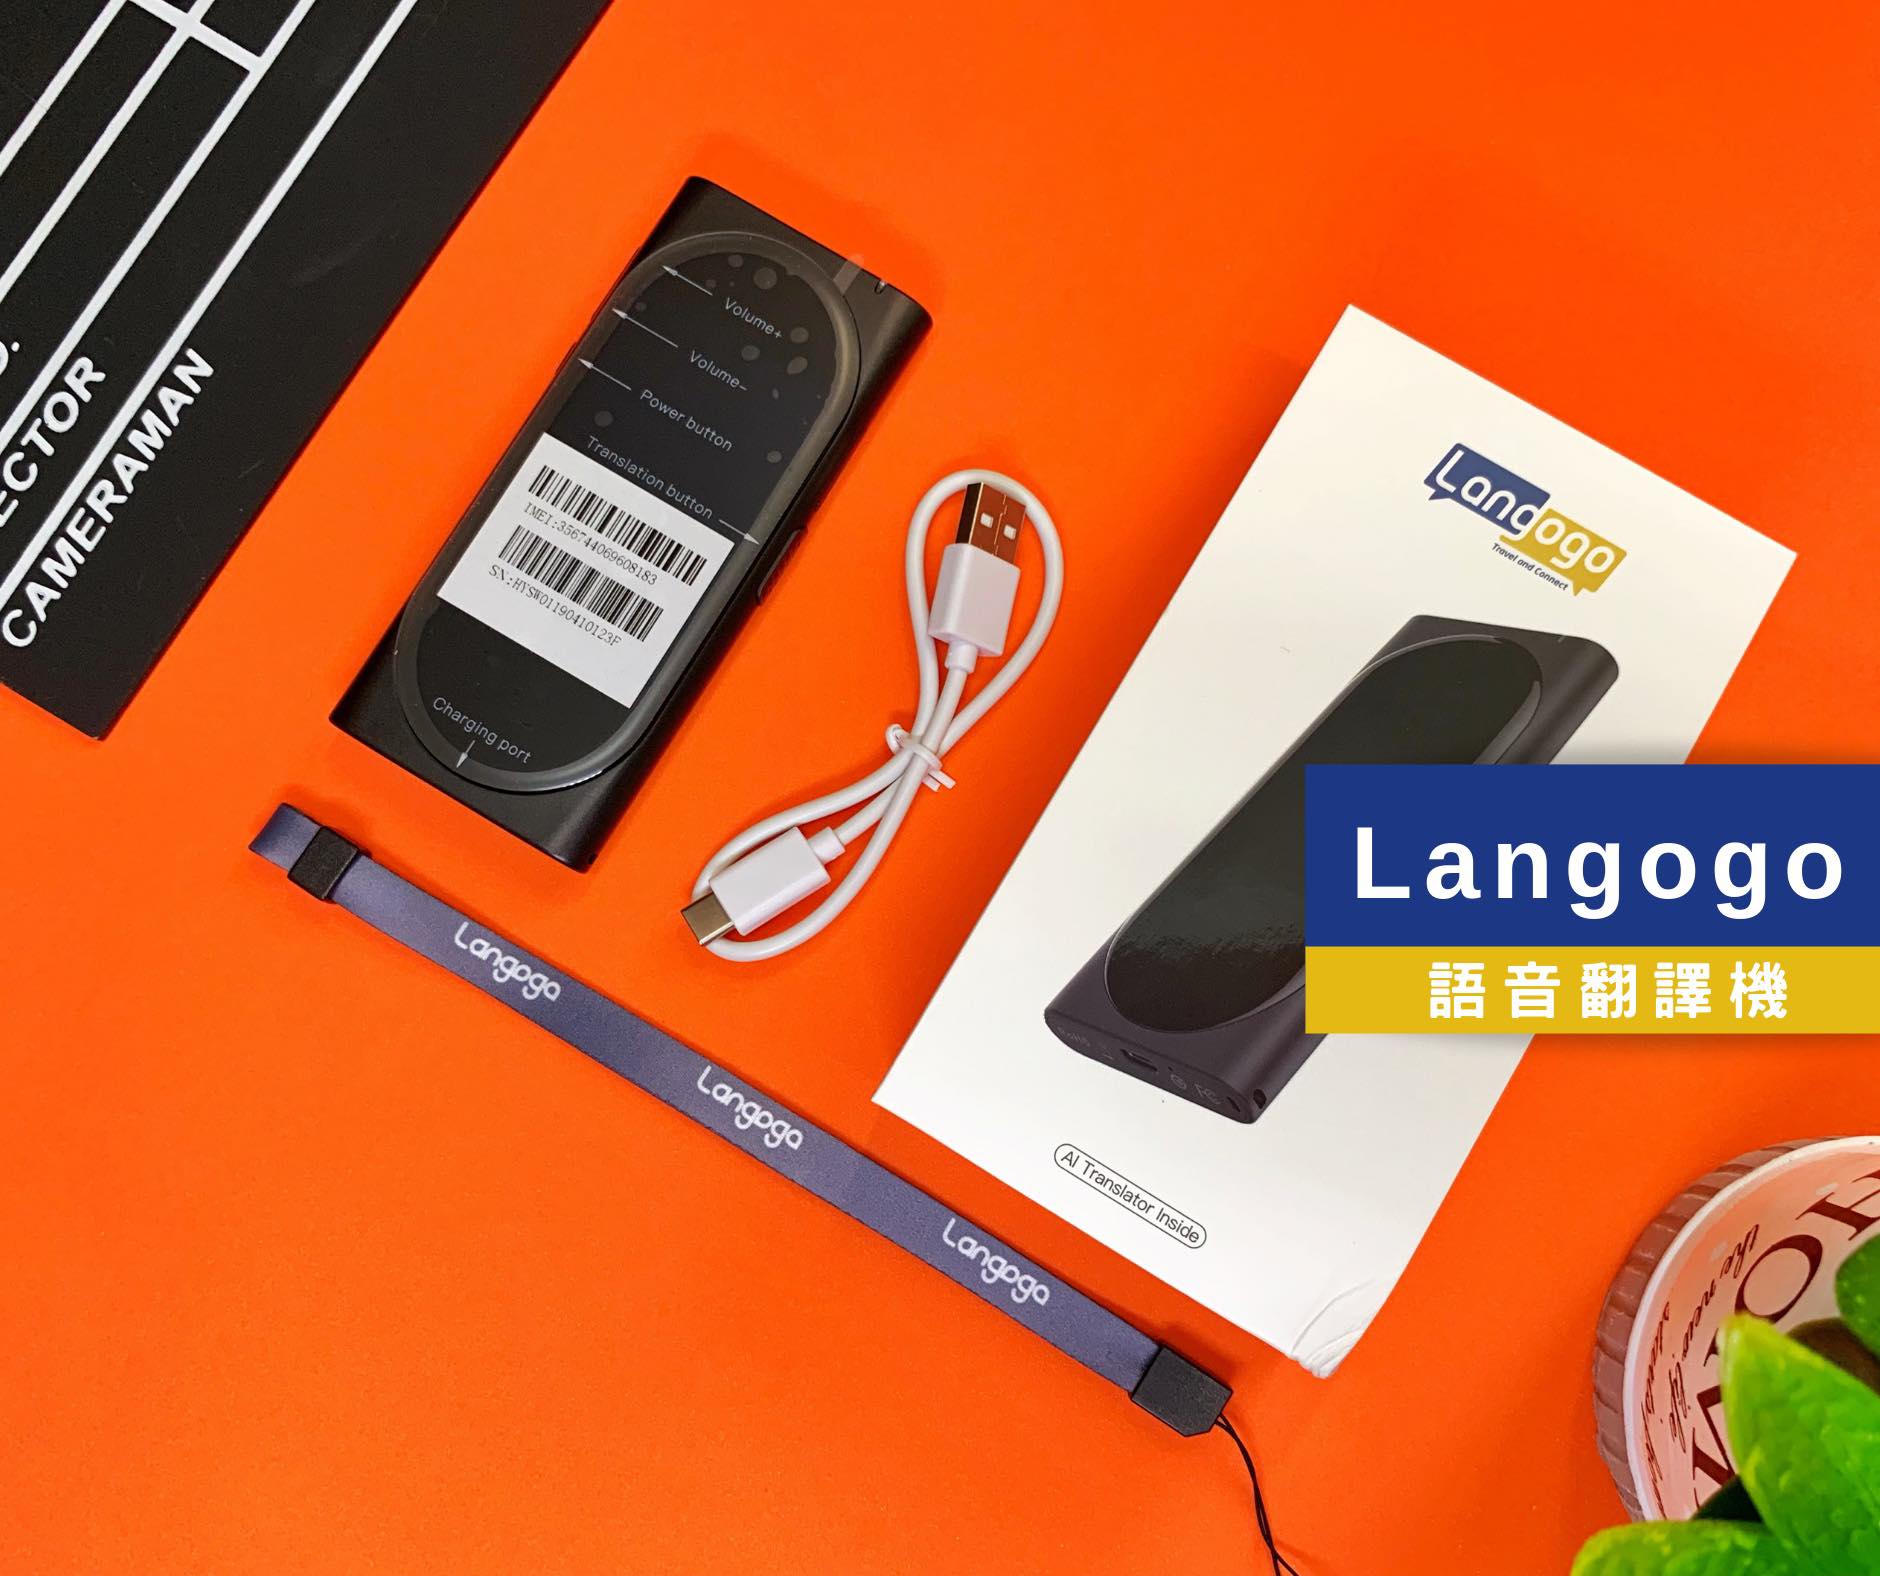 Langogo 語音翻譯機 – 旅遊 翻譯不求人、具備 eSIM 及 Wi-Fi 分享器使用